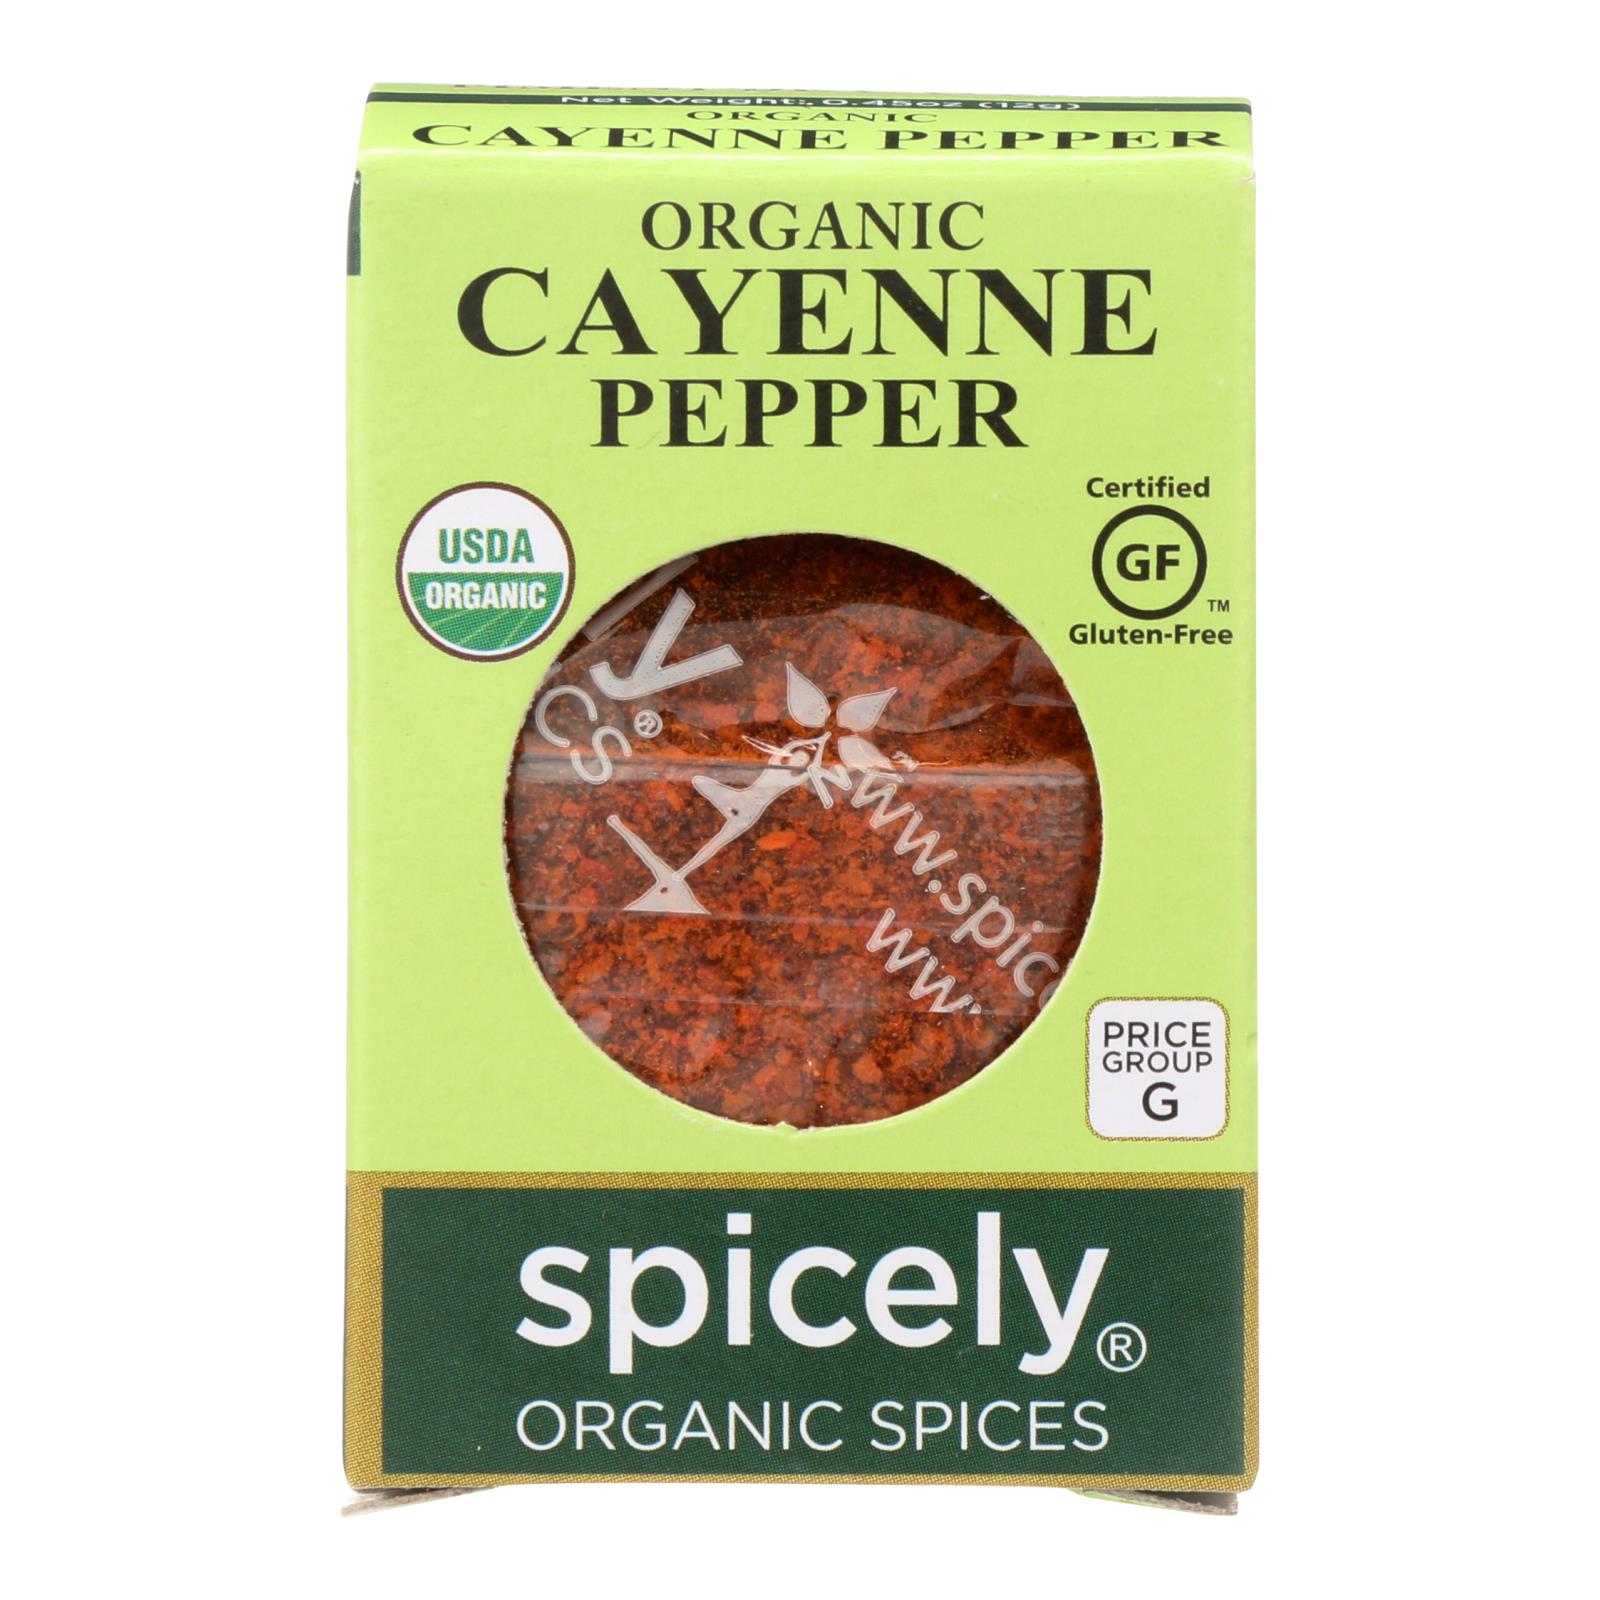 Spicely Organics - Organic Cayenne Pepper - 6개 묶음상품 - 0.45 oz.